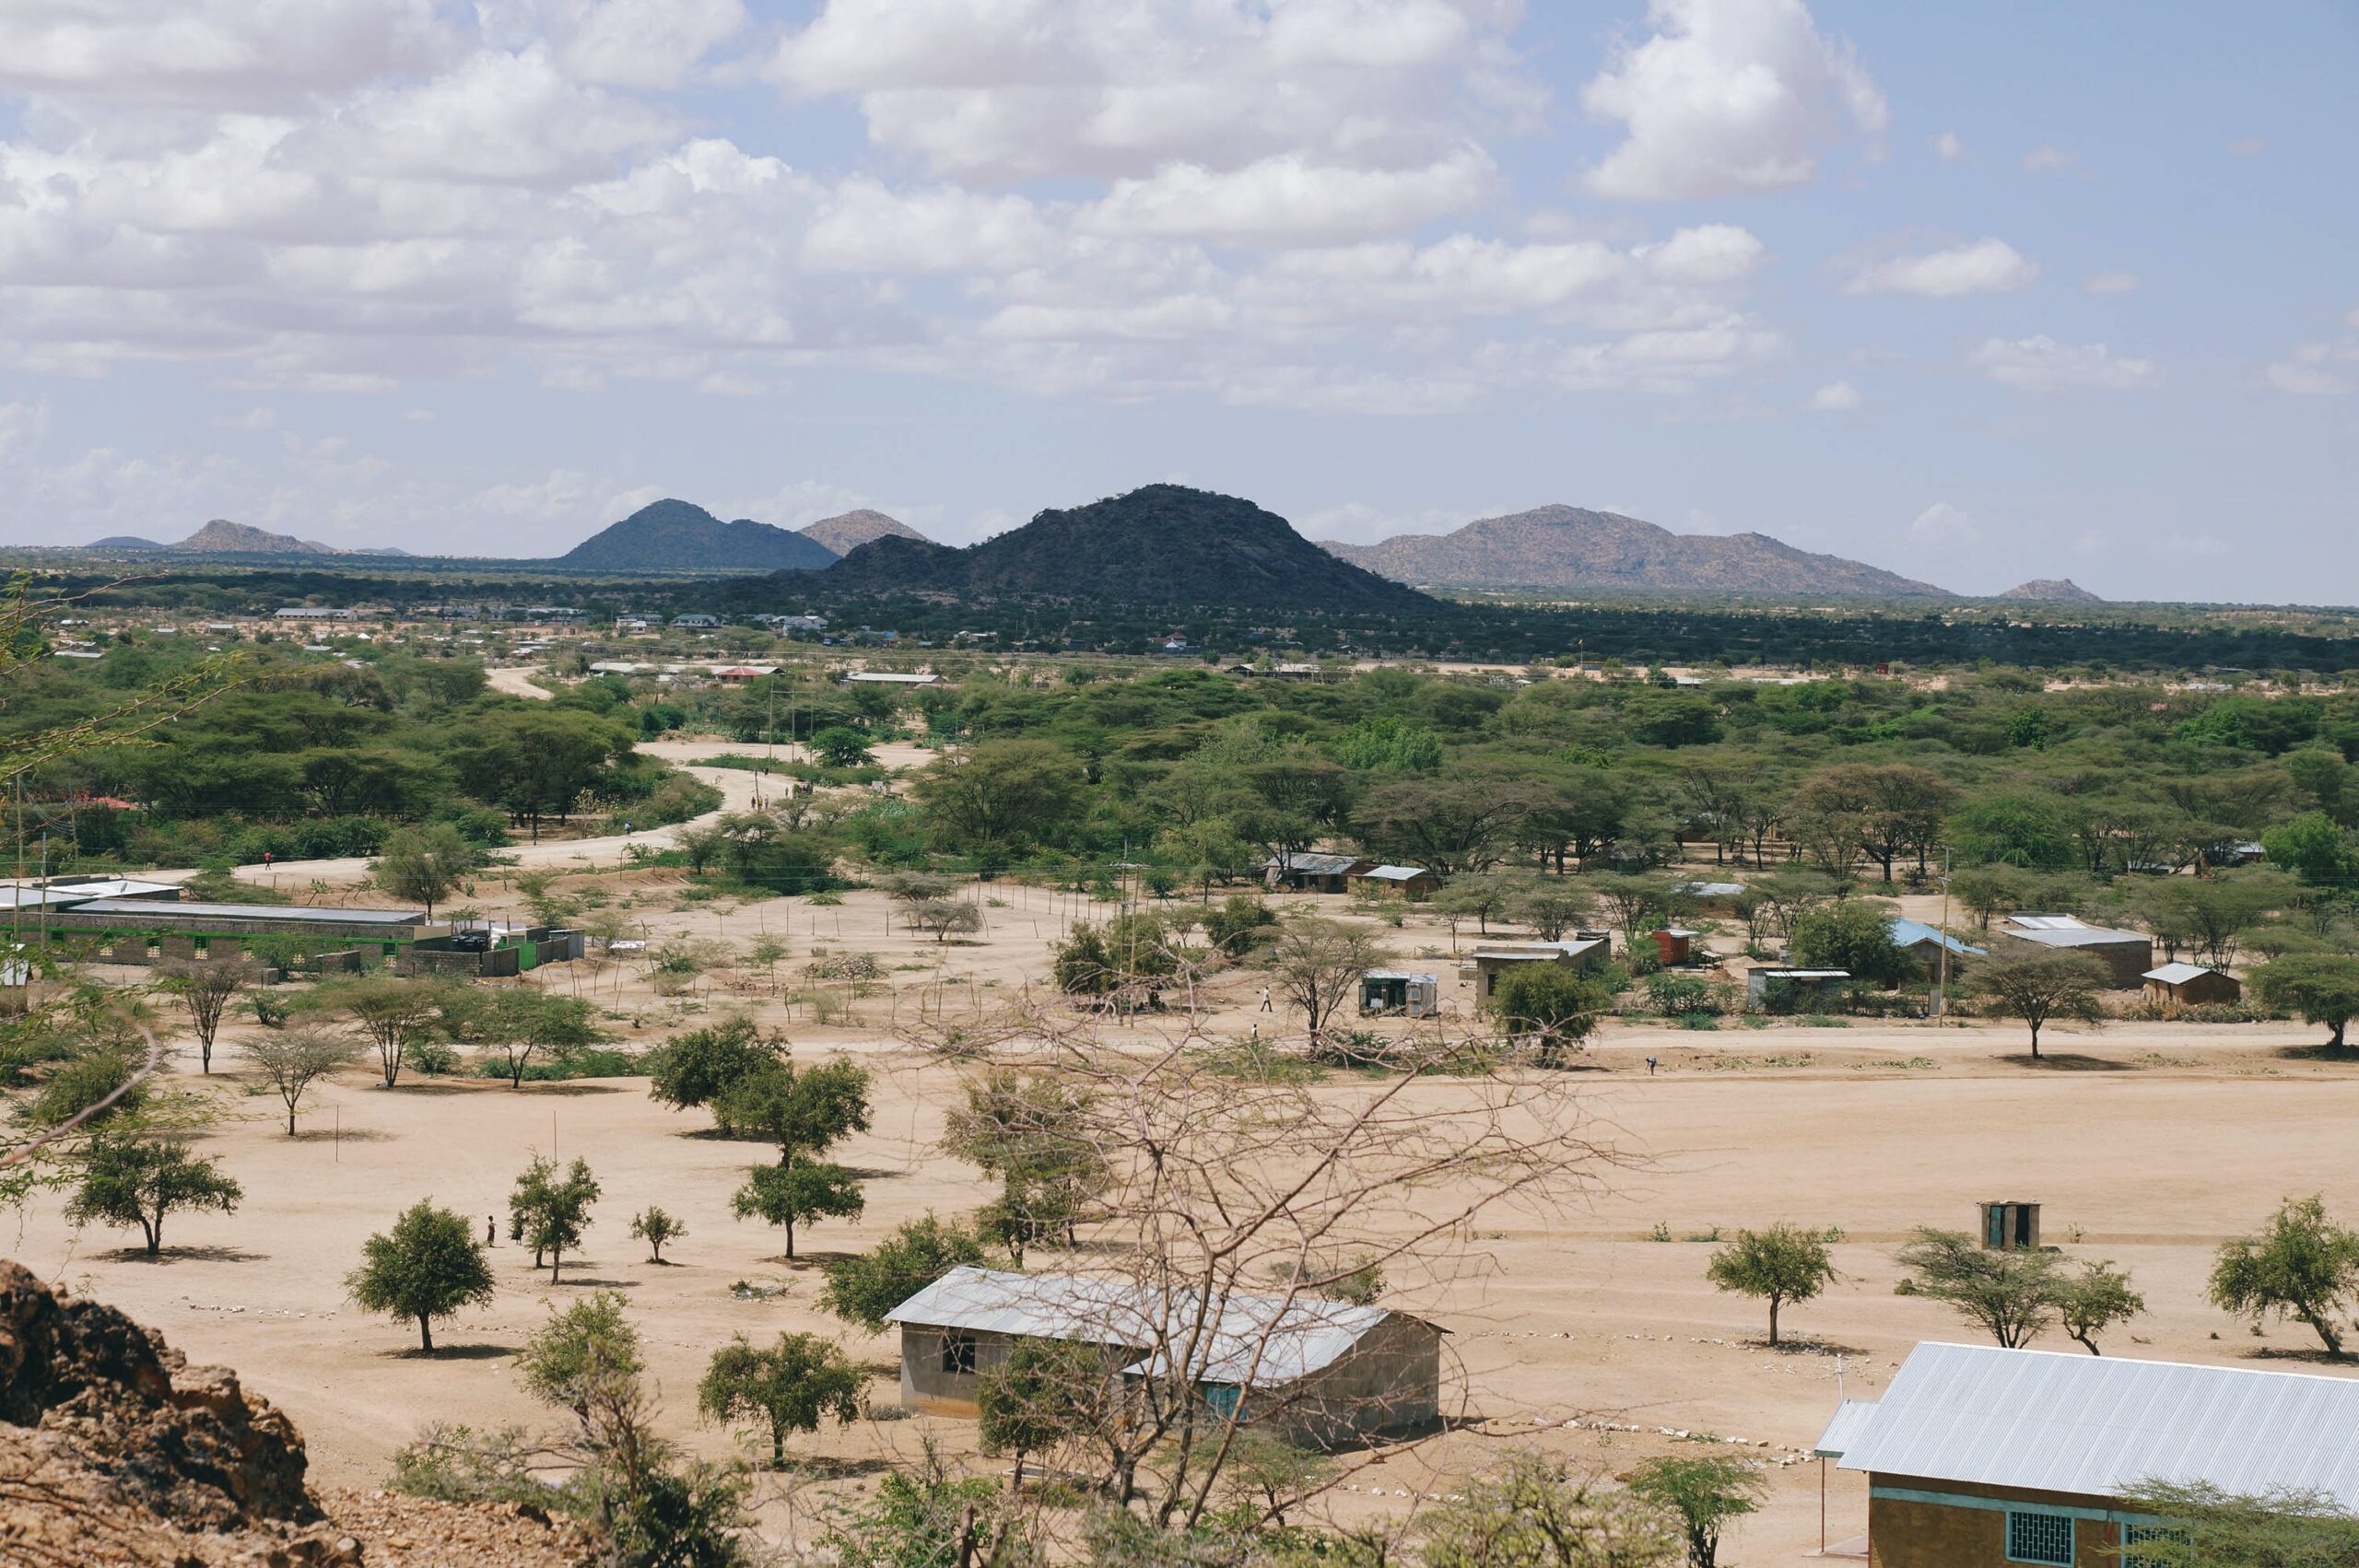 Turkana in Kenya